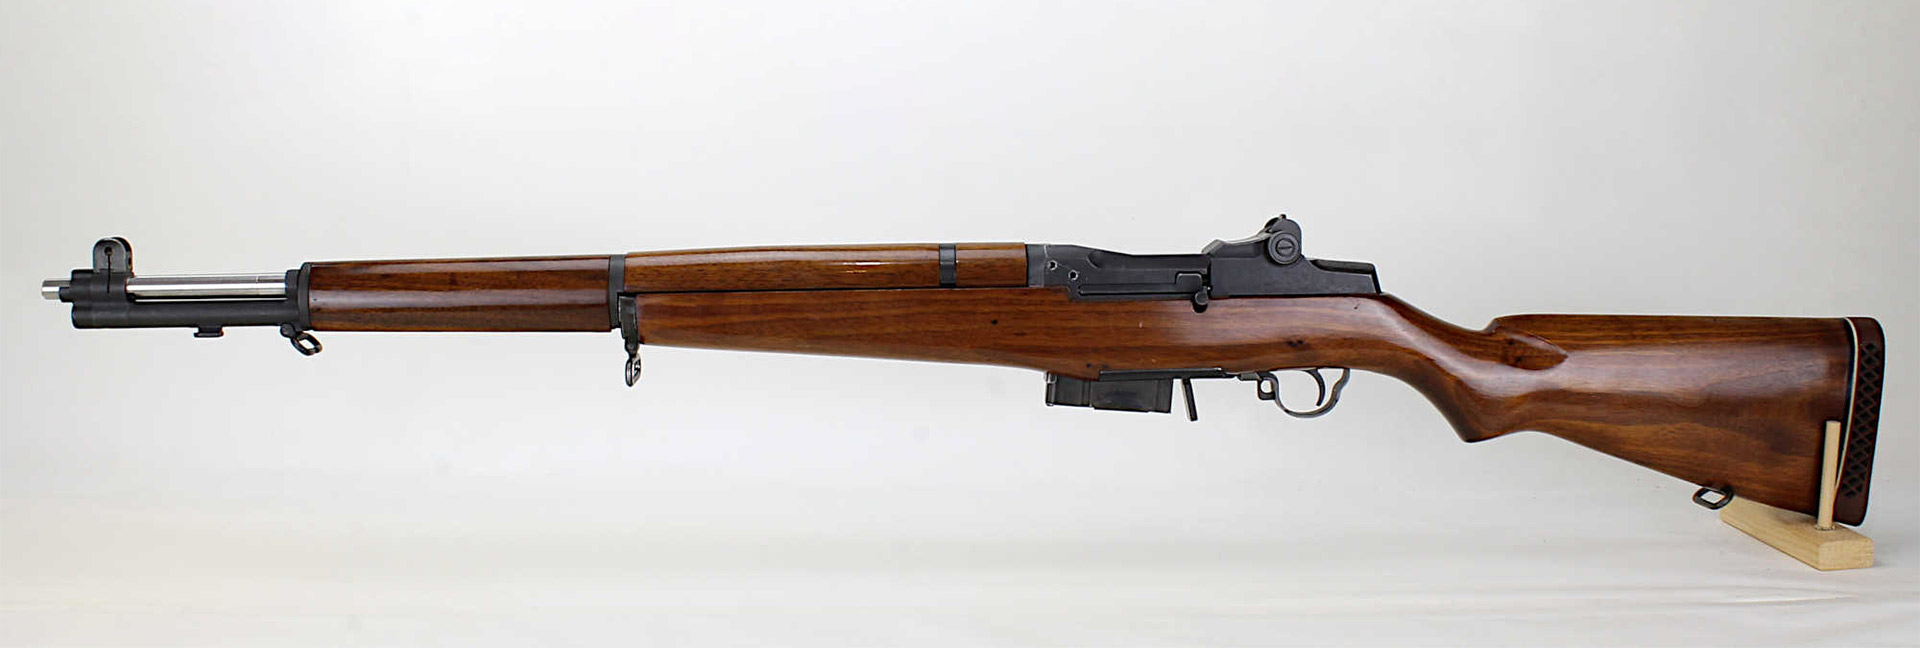 Converted M1 Garand with inserted 5-round M14 magazine